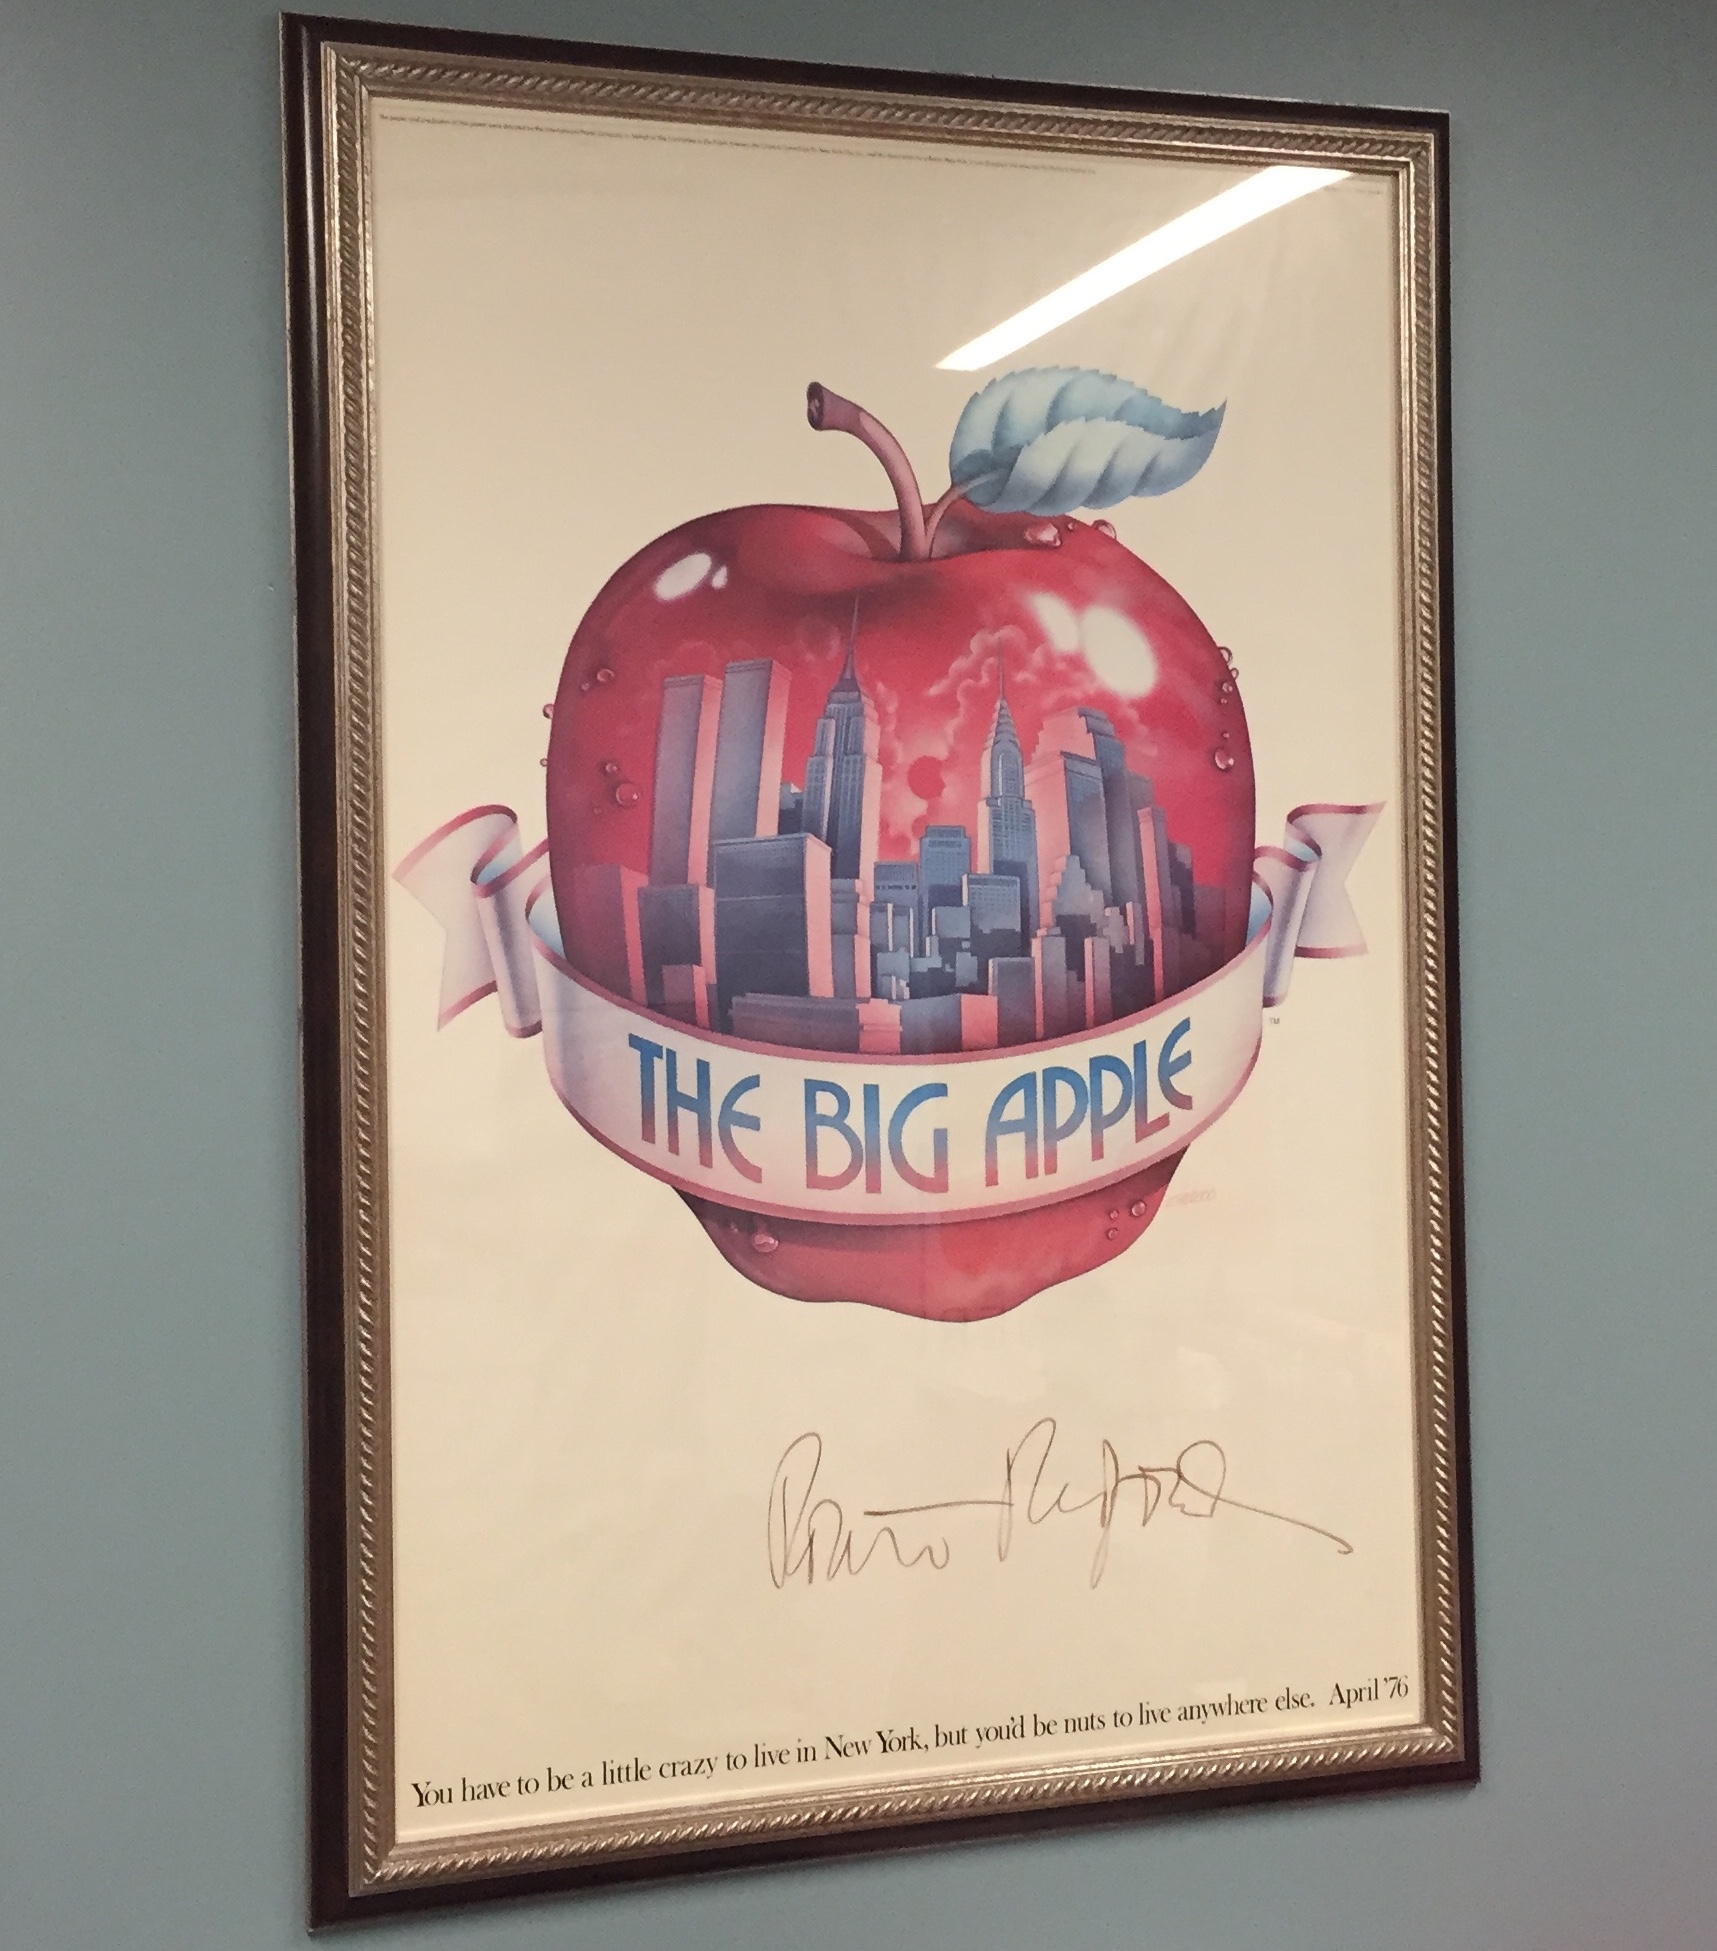 Big Apple Ogilvy & Mather Poster Created Pro Bono for the City of New York Pro Bono.